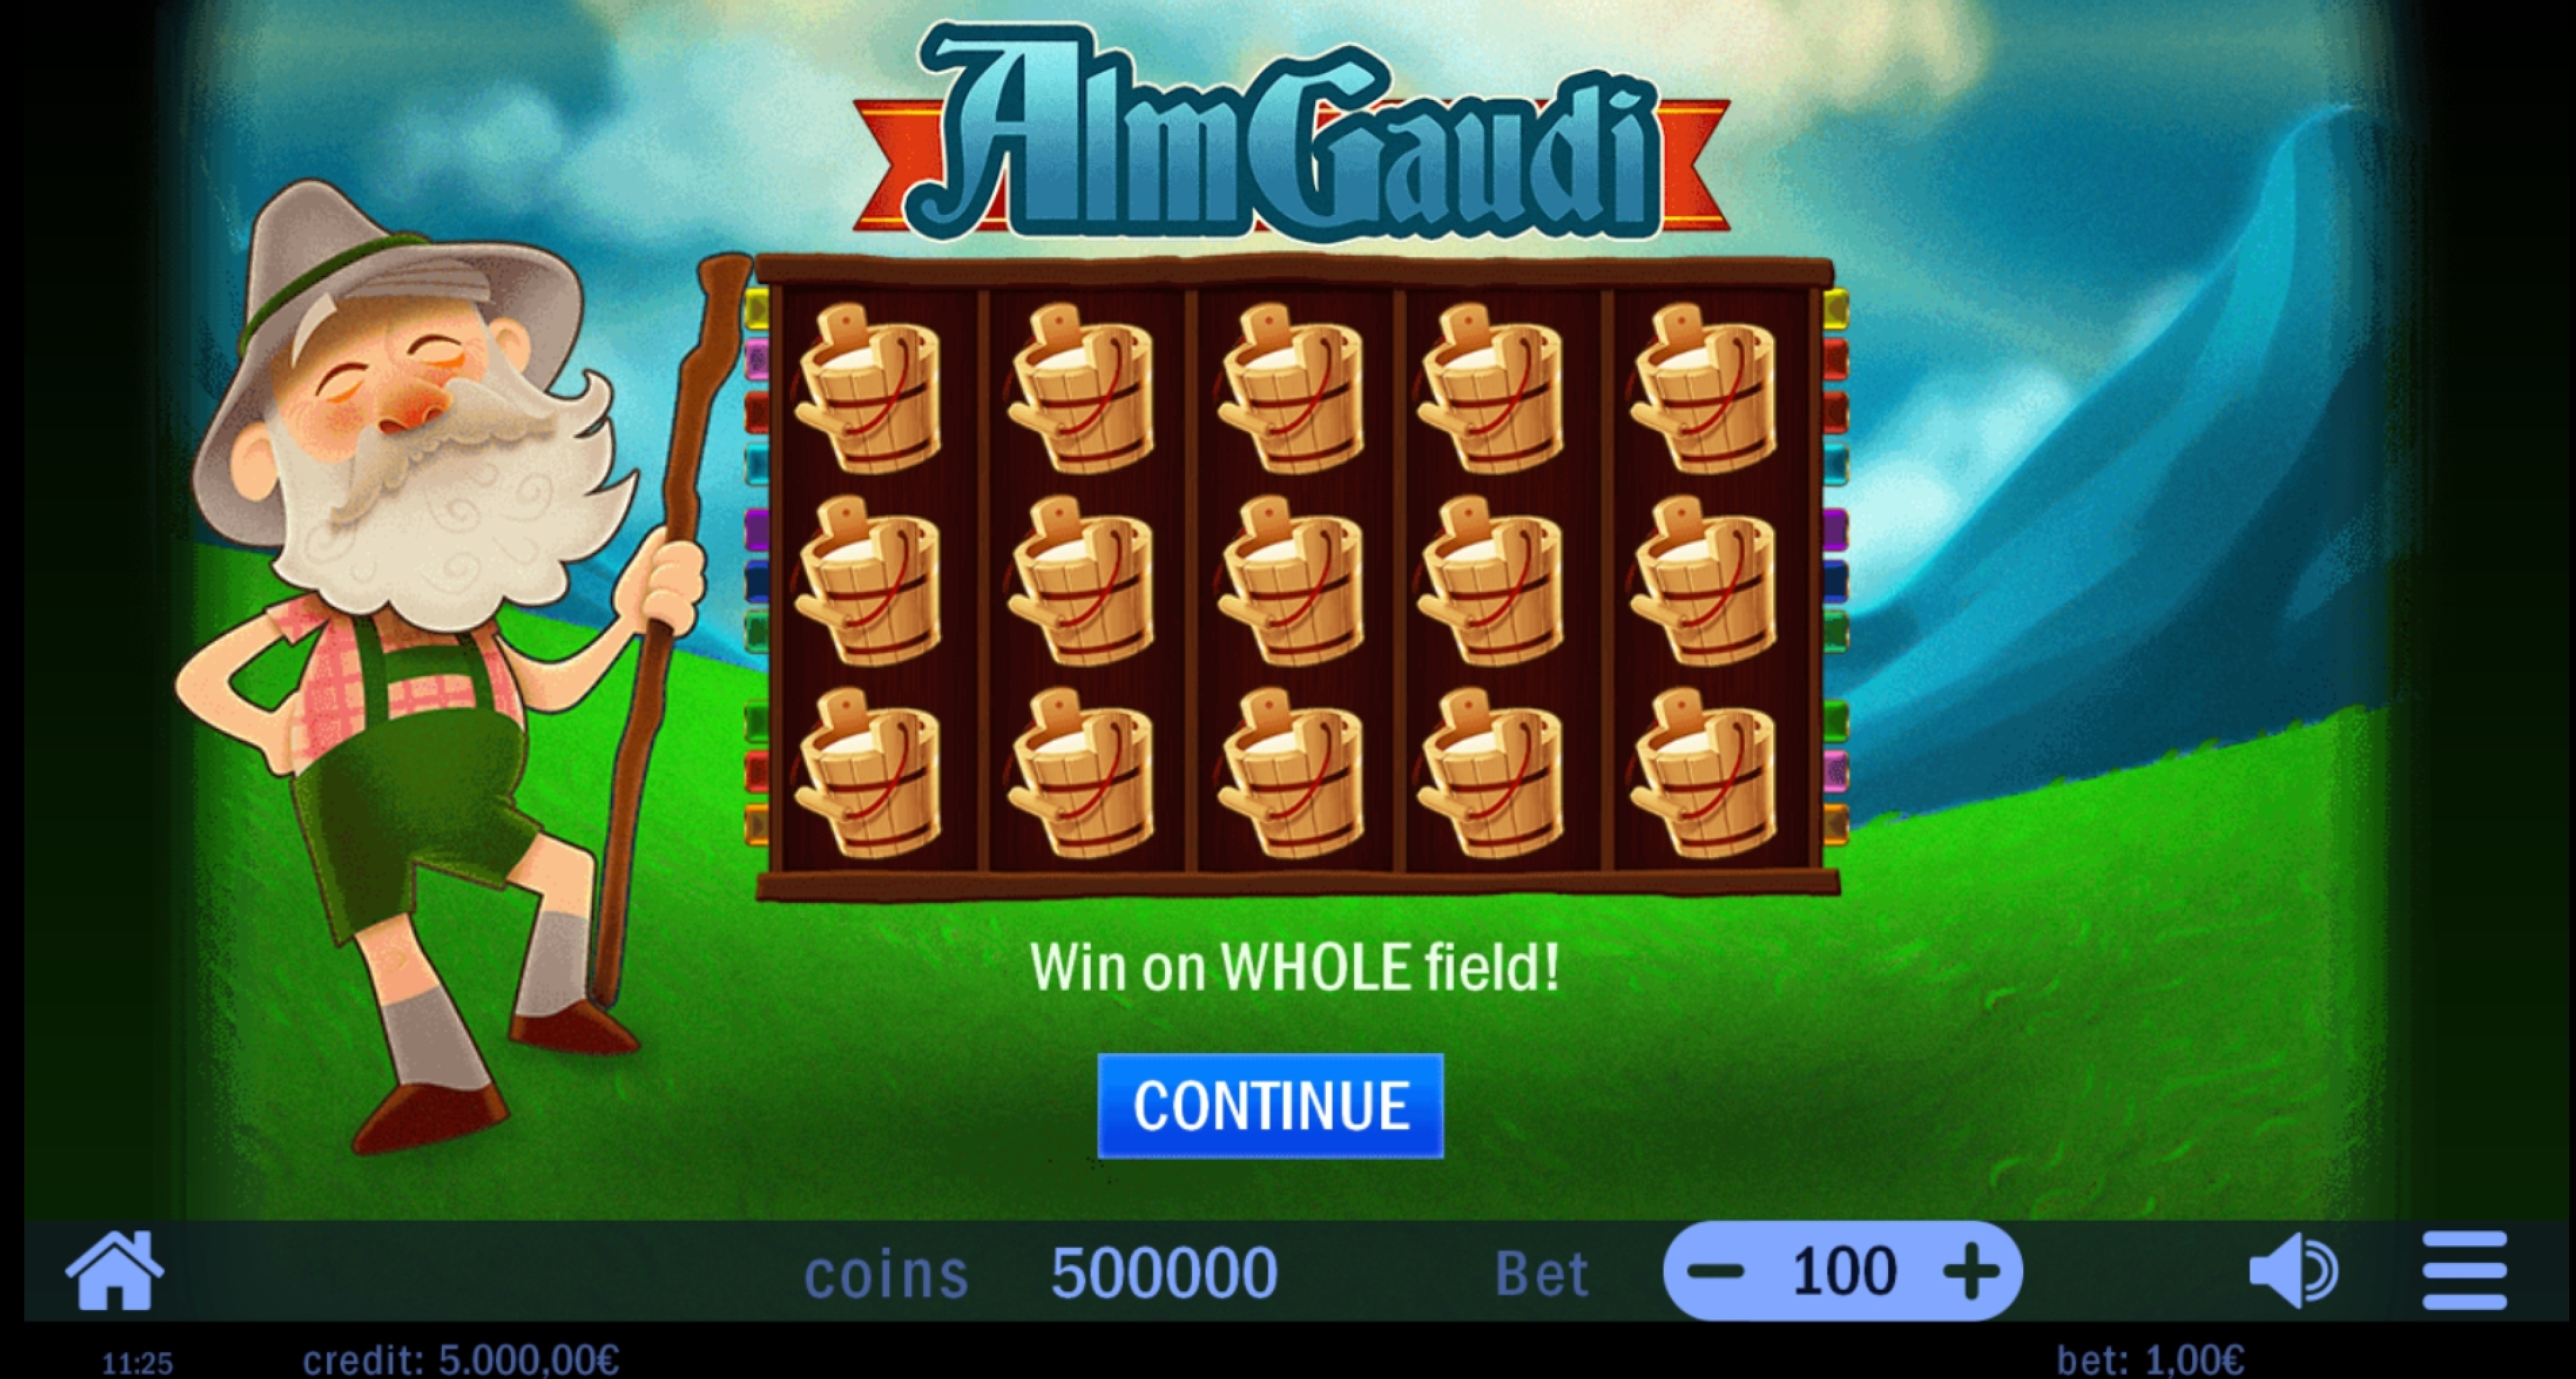 Play Alm Gaudi Free Casino Slot Game by Swintt